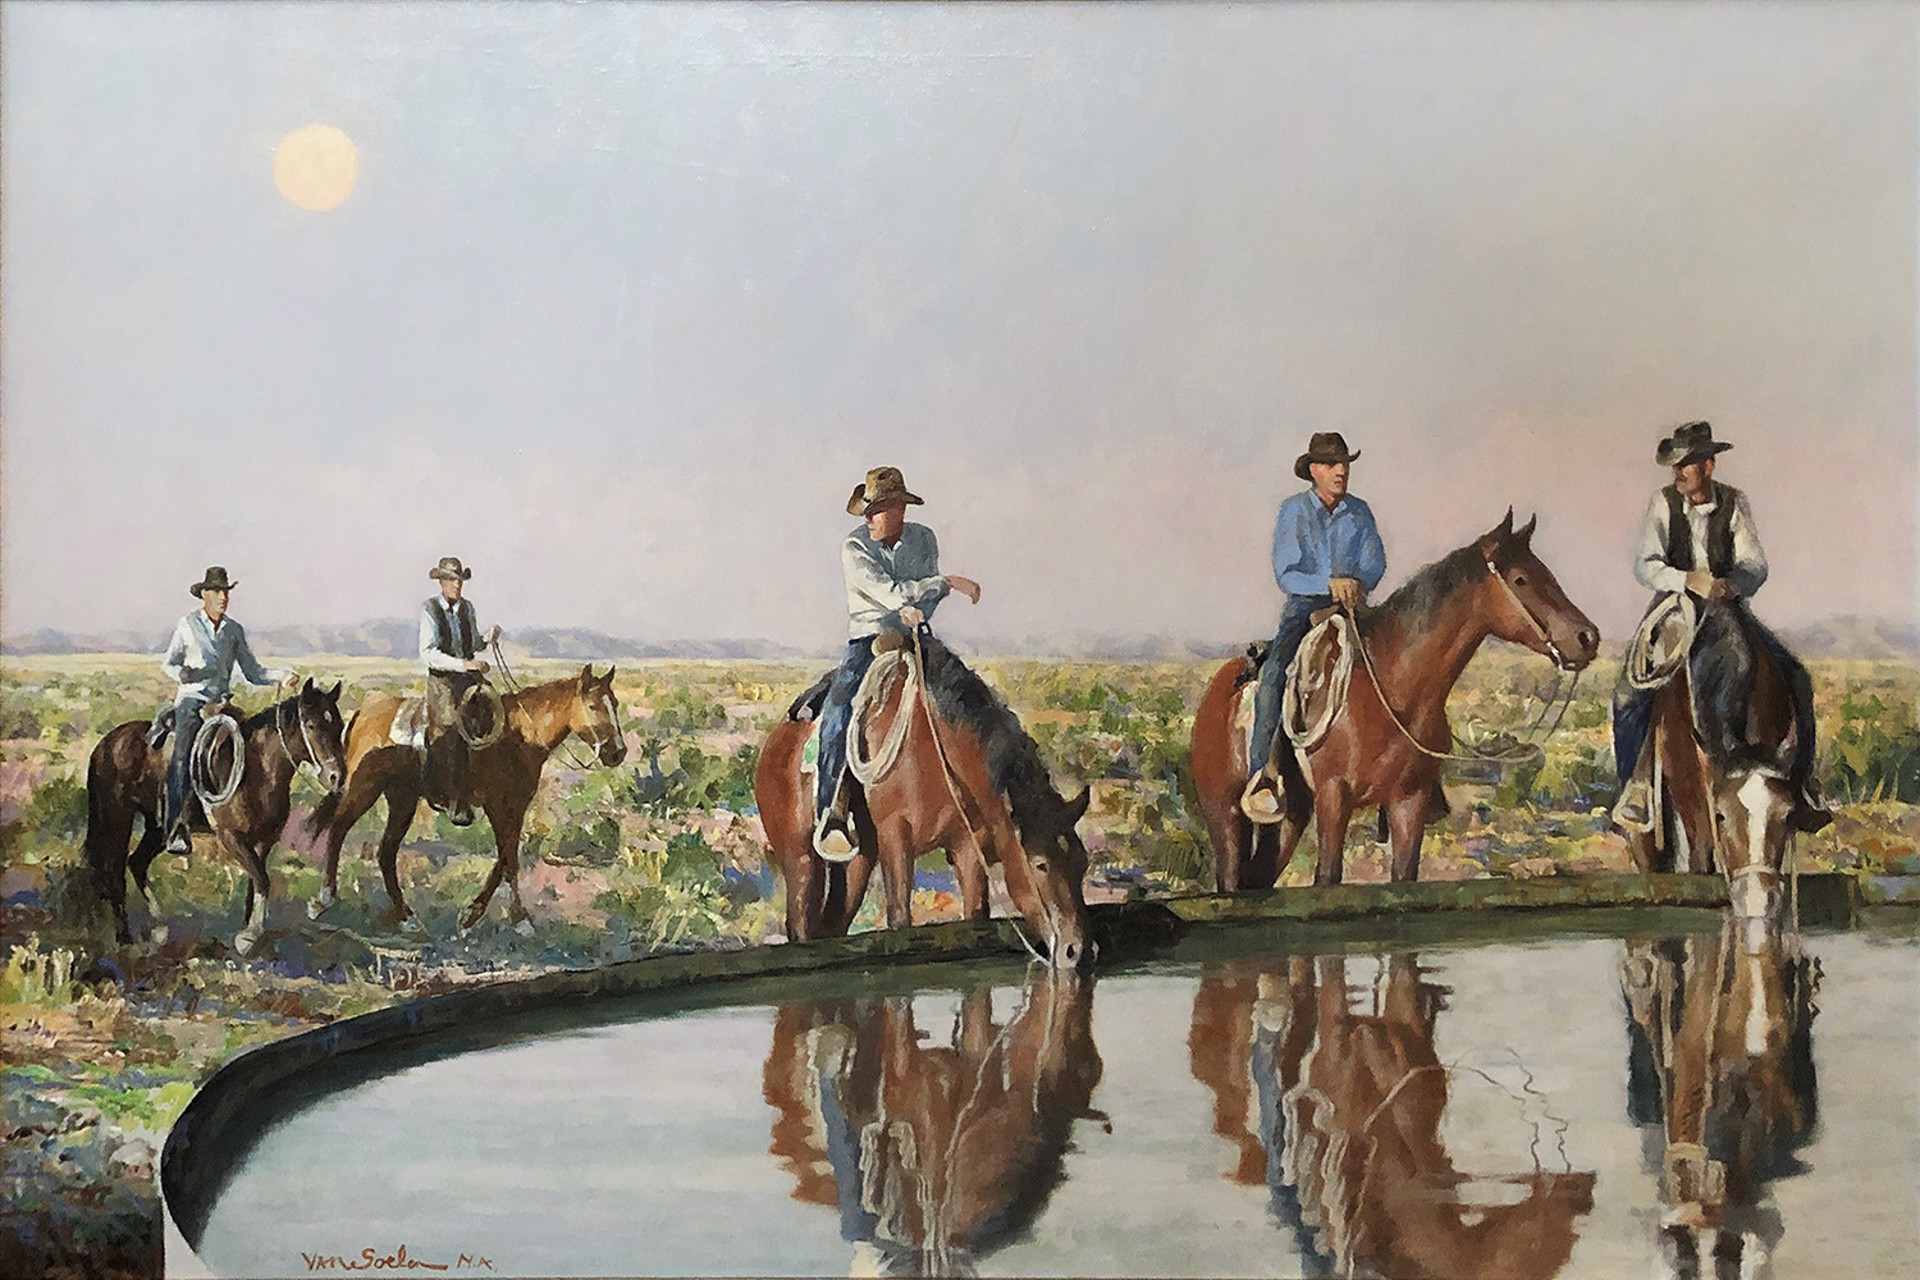 Five Cowboys on Horses at The Water Tank by Theodore Van Soelen